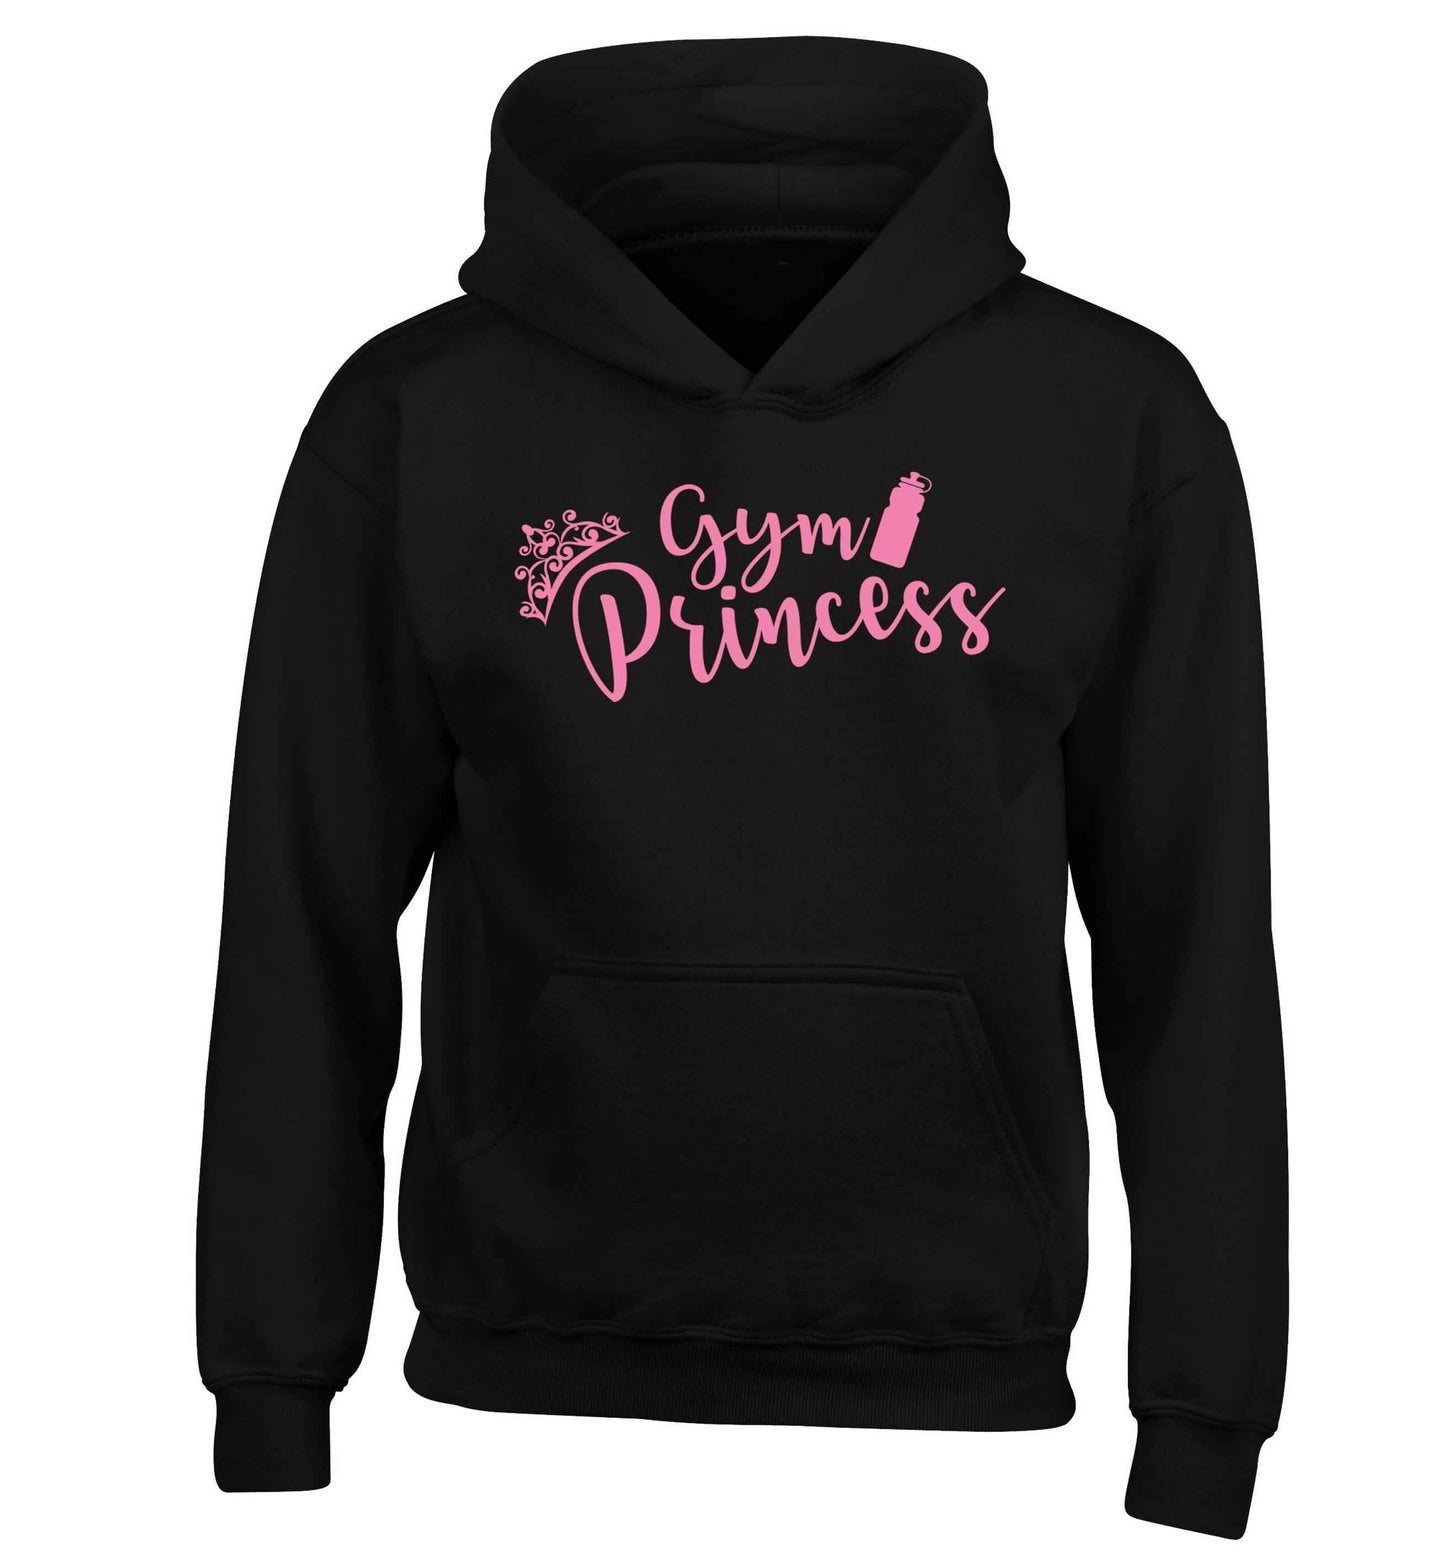 Gym princess children's black hoodie 12-13 Years